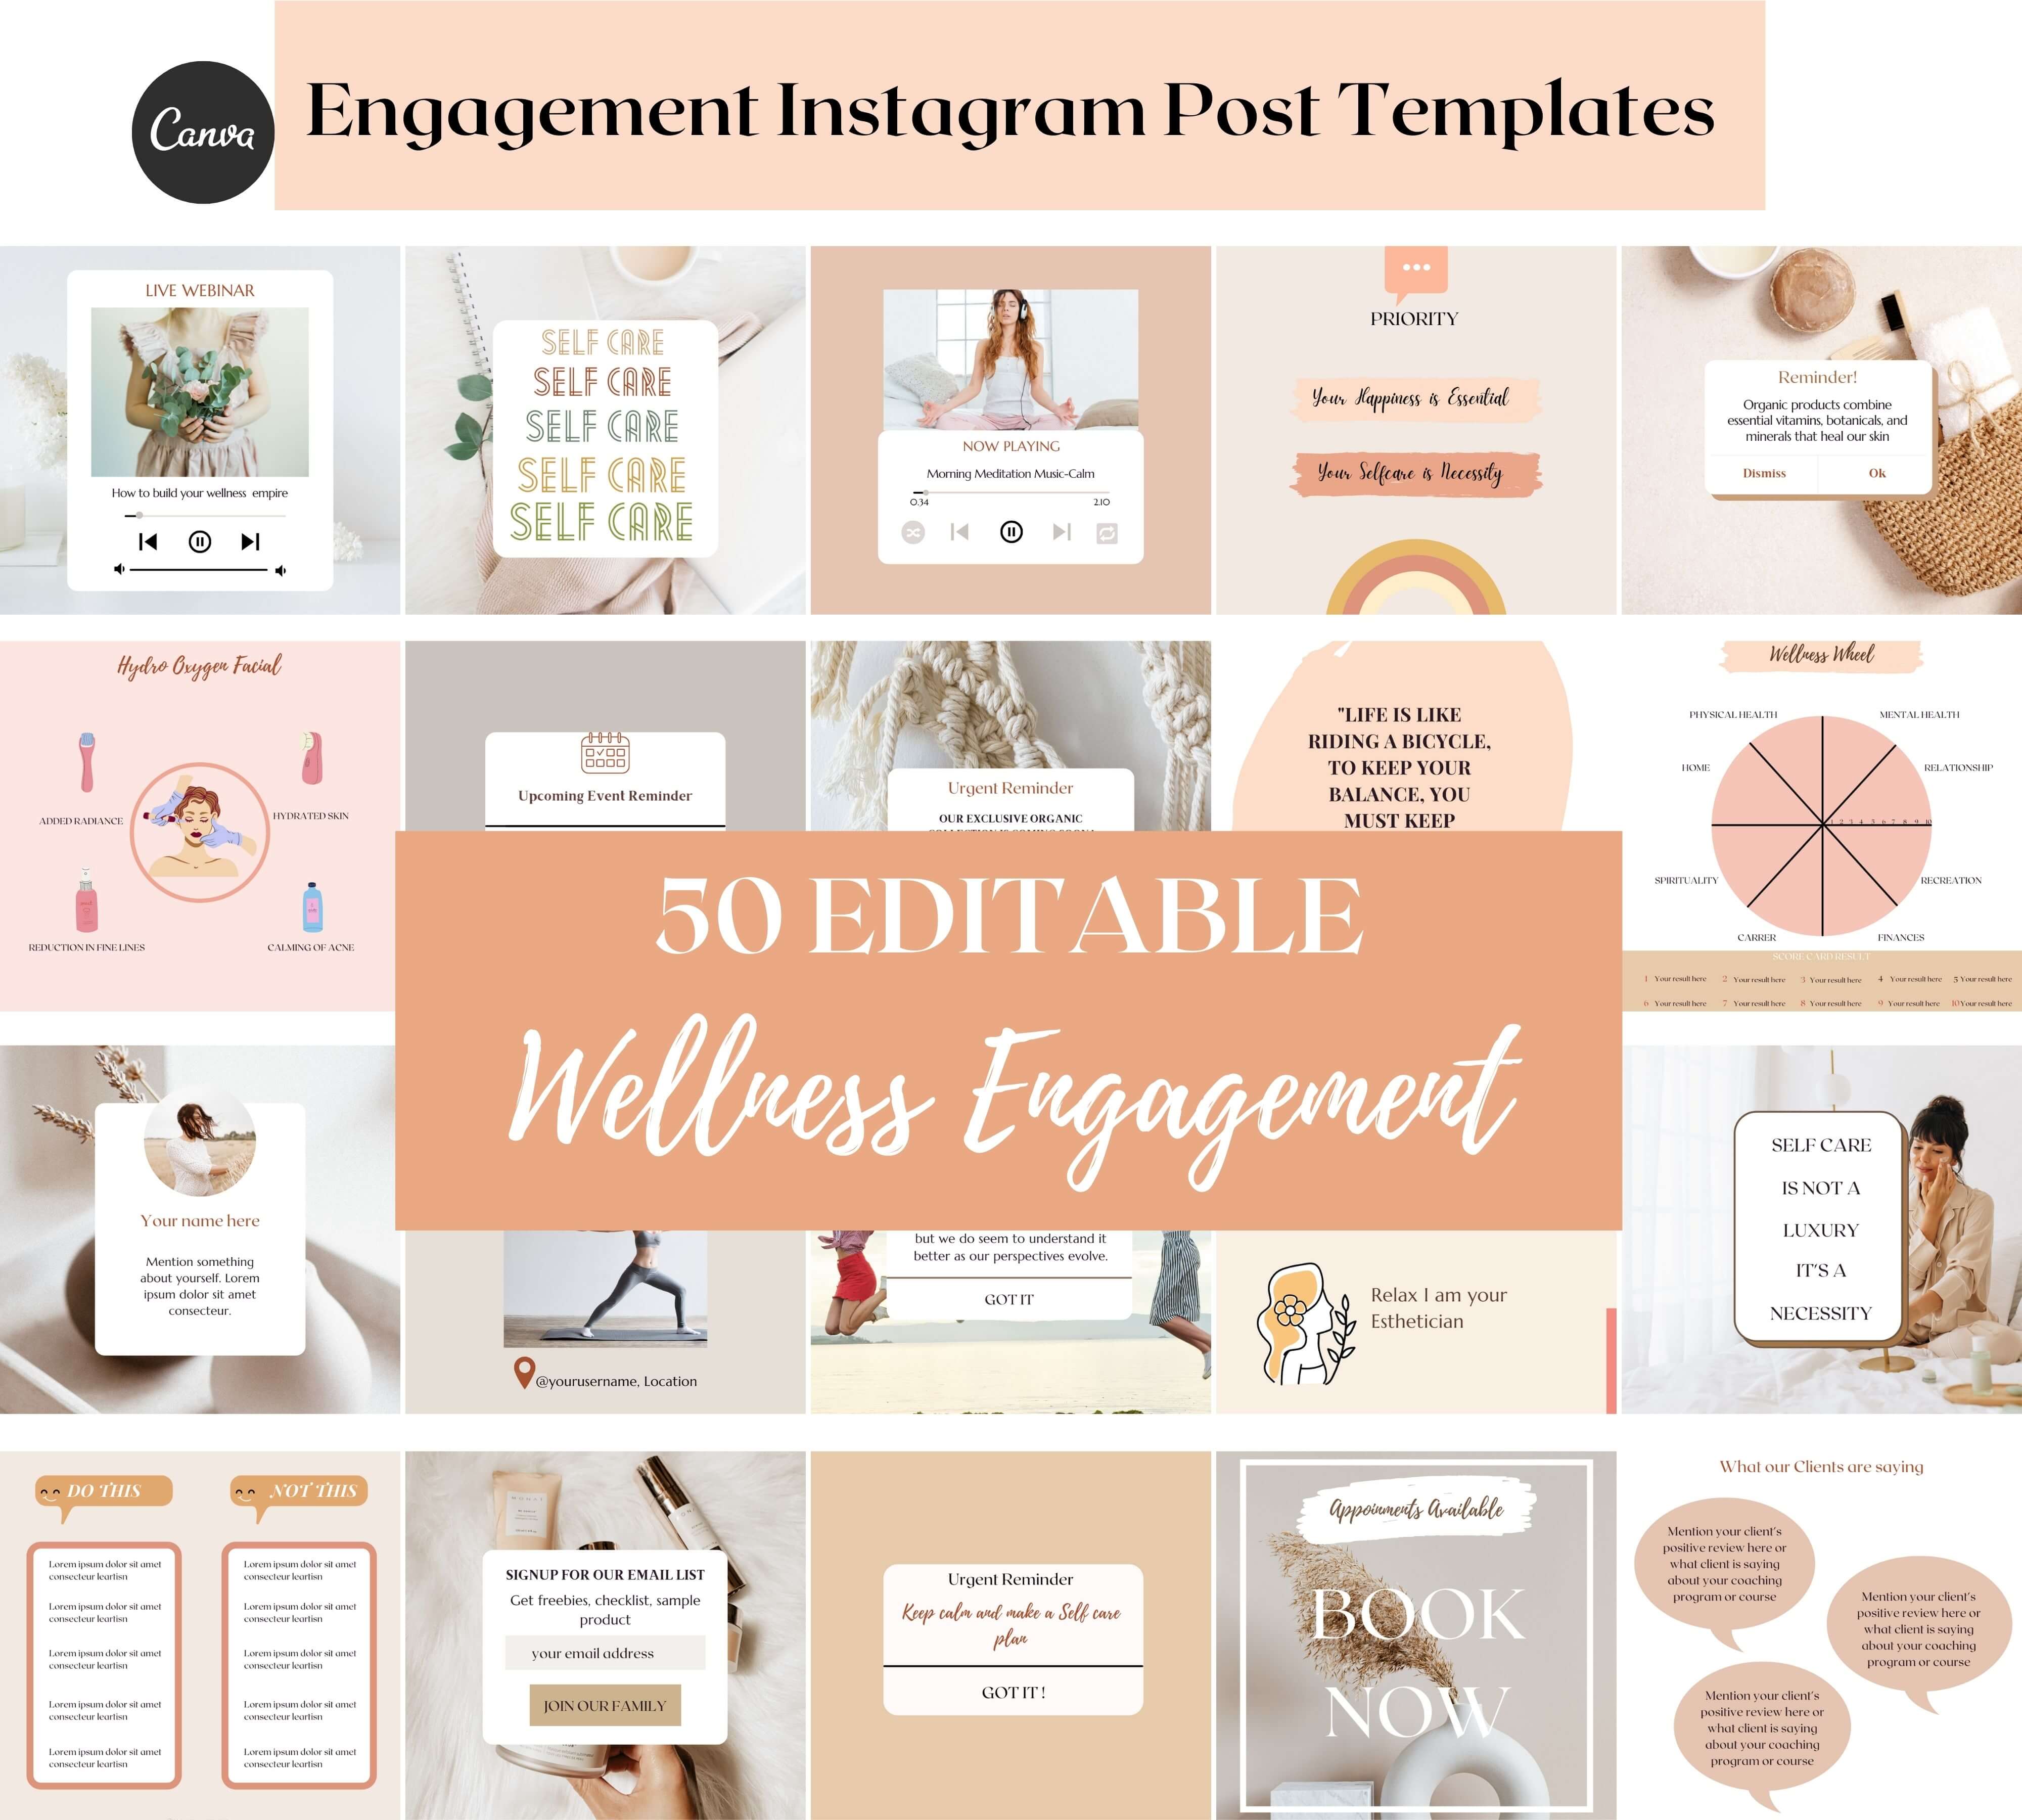 Wellness Instagram engagement templates